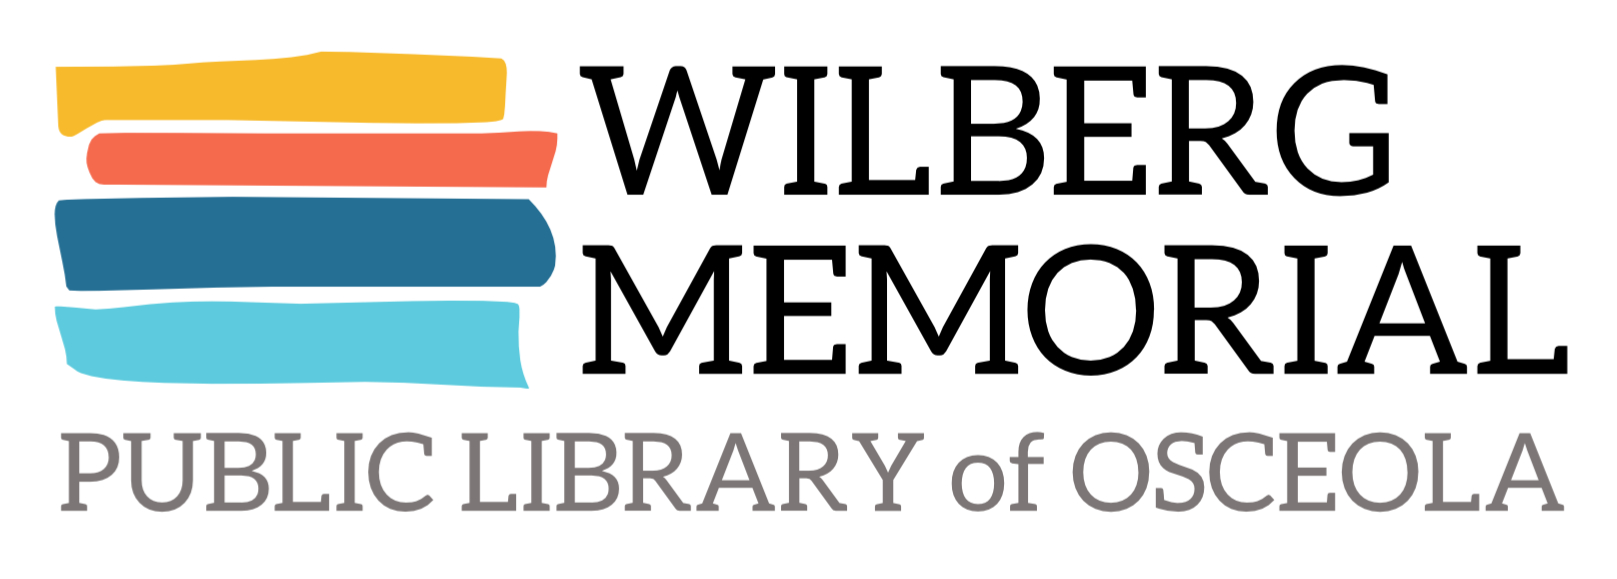 Wilberg Memorial Library, Osceola